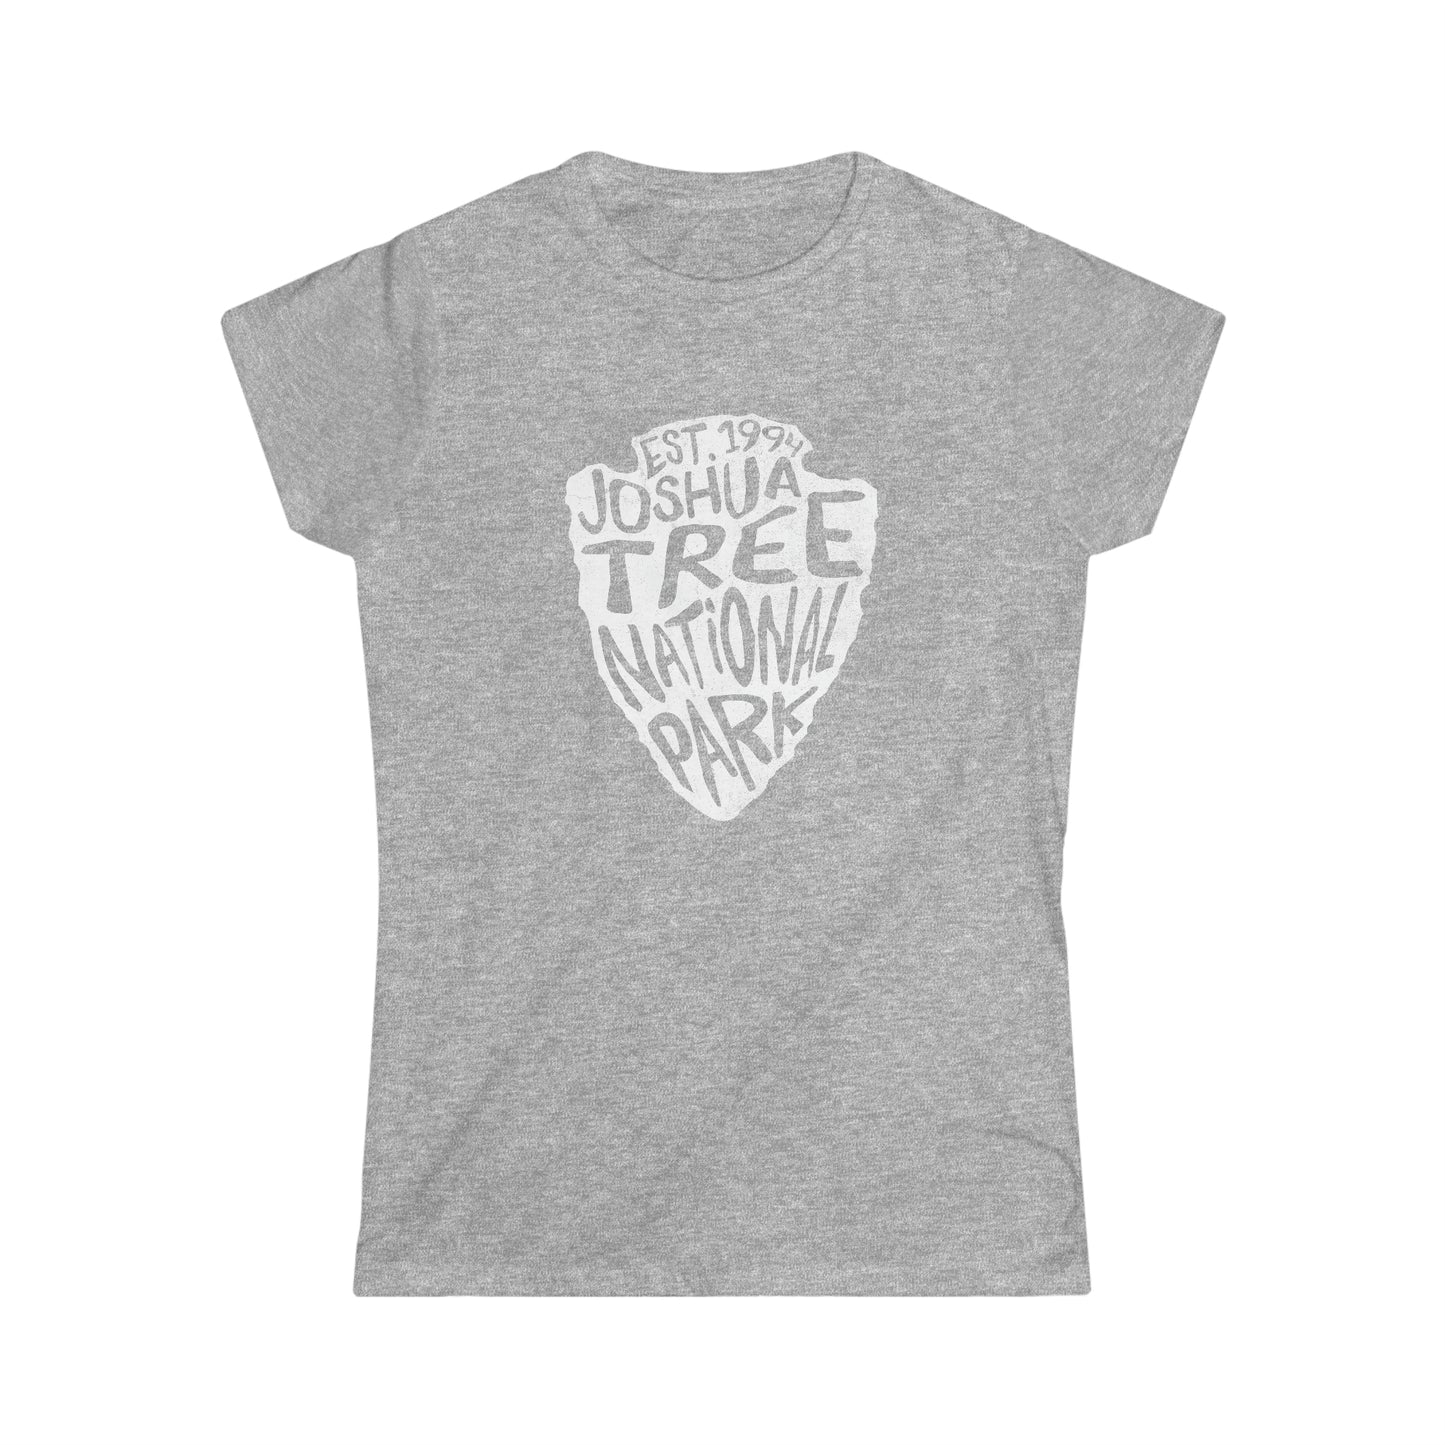 Joshua Tree National Park Women's T-Shirt - Arrowhead Design